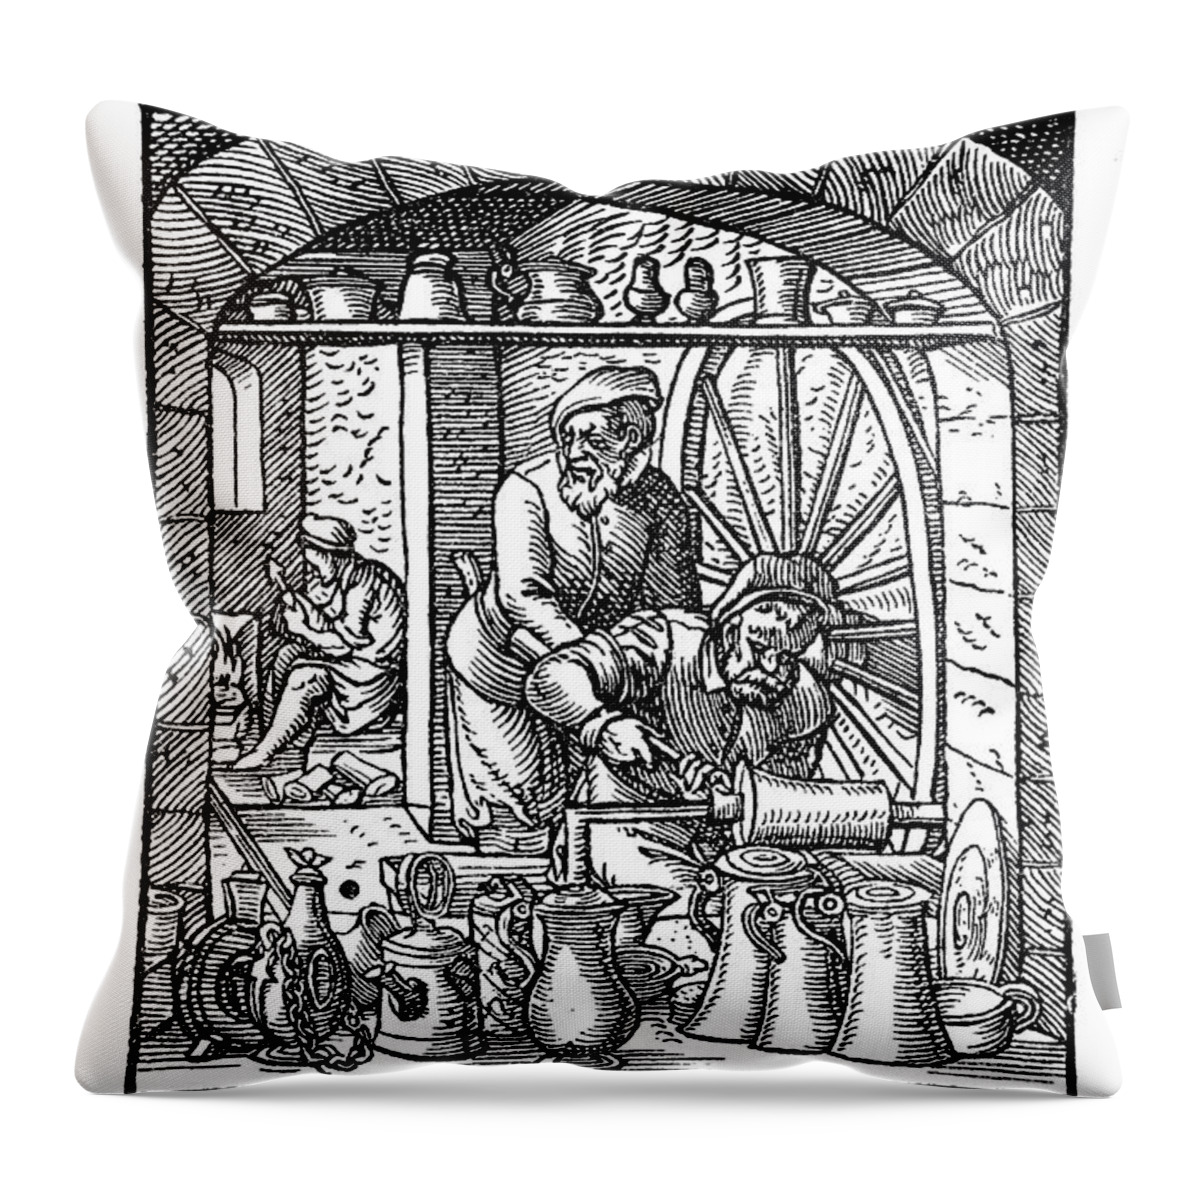 Xvi Century Throw Pillow featuring the drawing The pewter jars maker workshop, XVI century engraving by Luisa Vallon Fumi